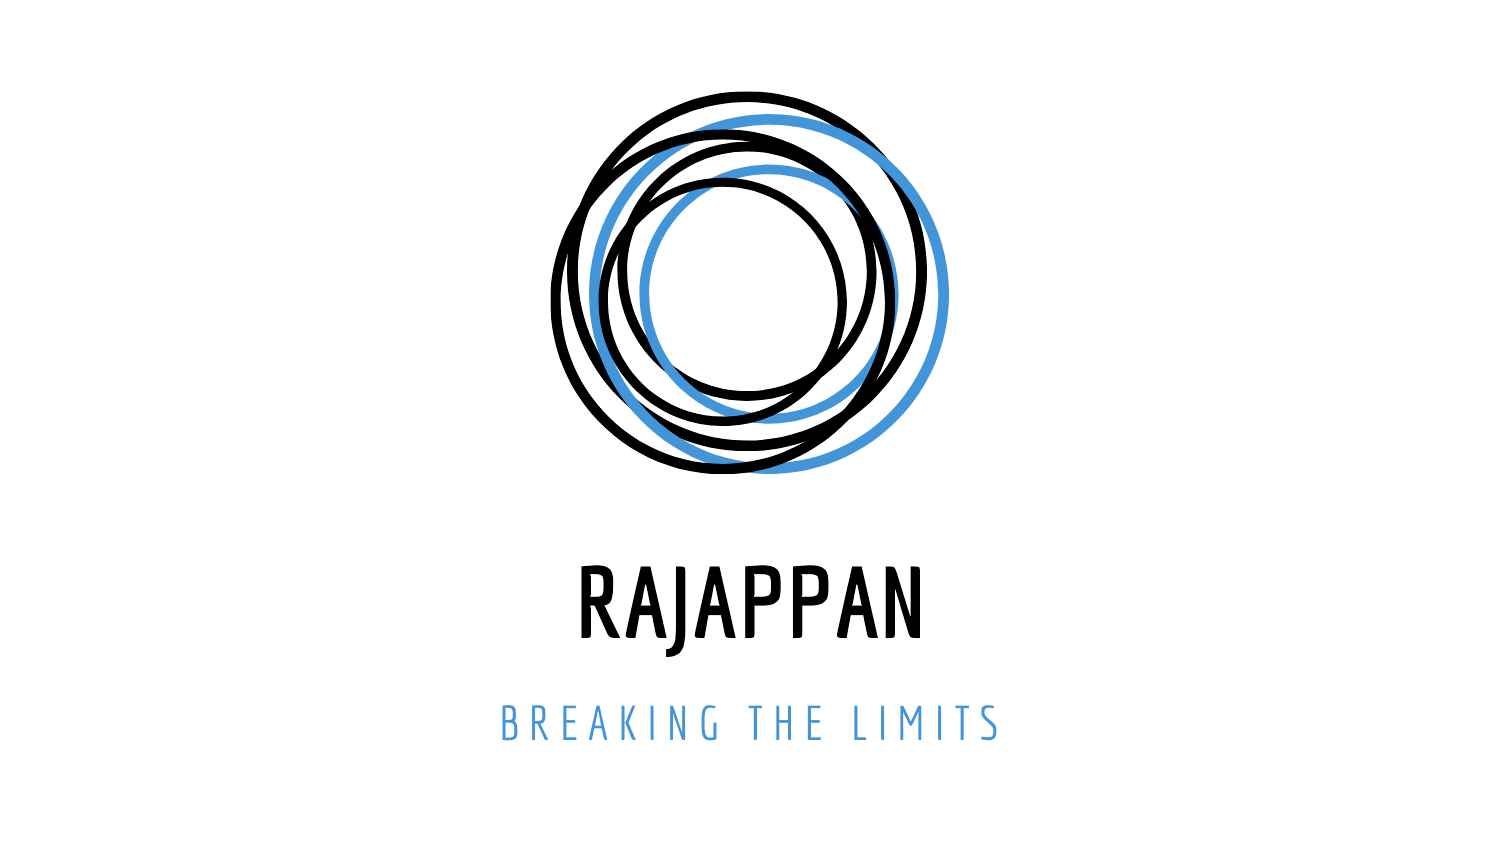 Rajappan: Breaking the limits